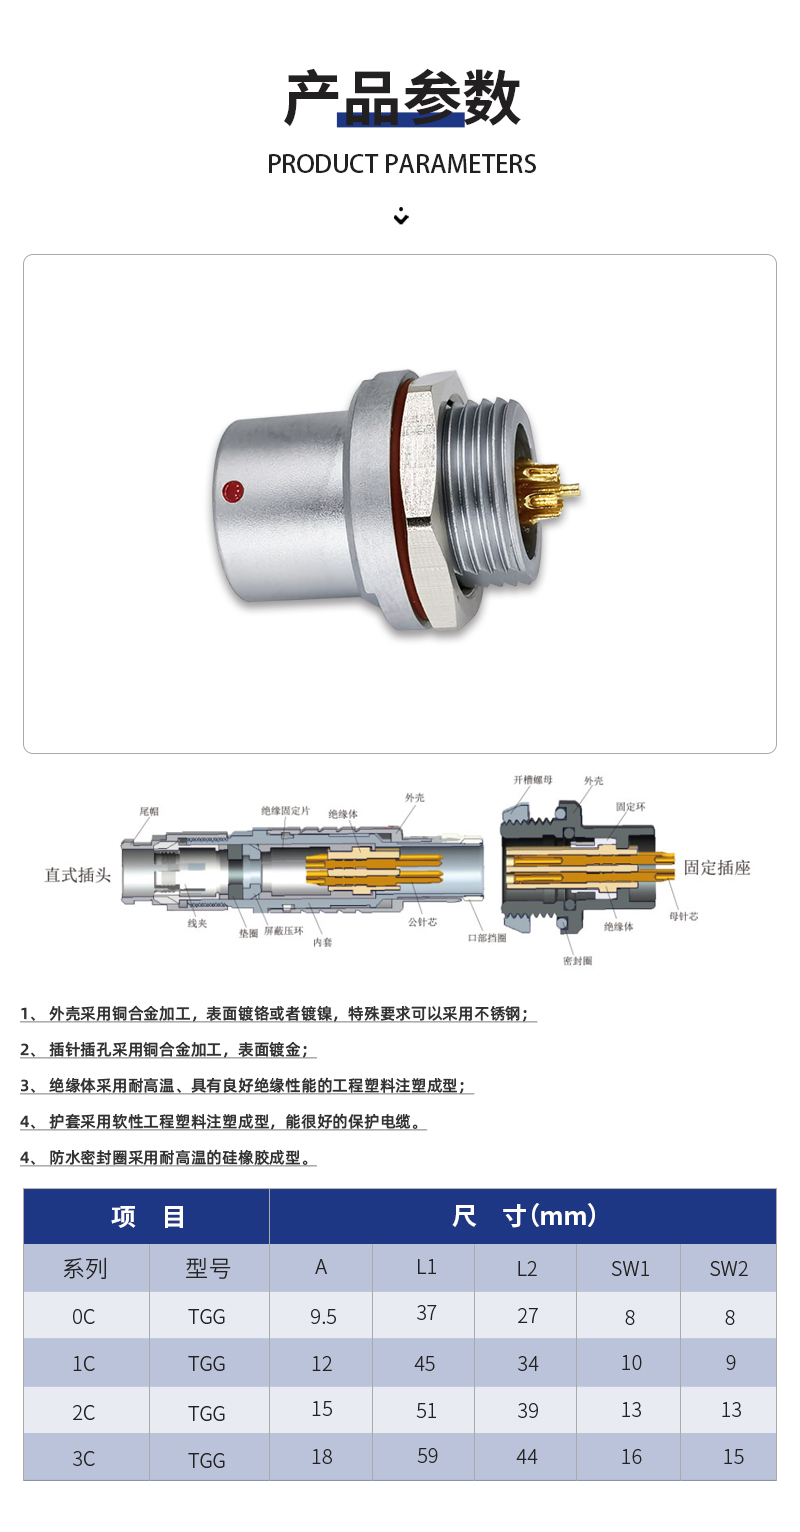 Navigation C series ZHG302 2-core copper alloy plug aerospace socket circular connector